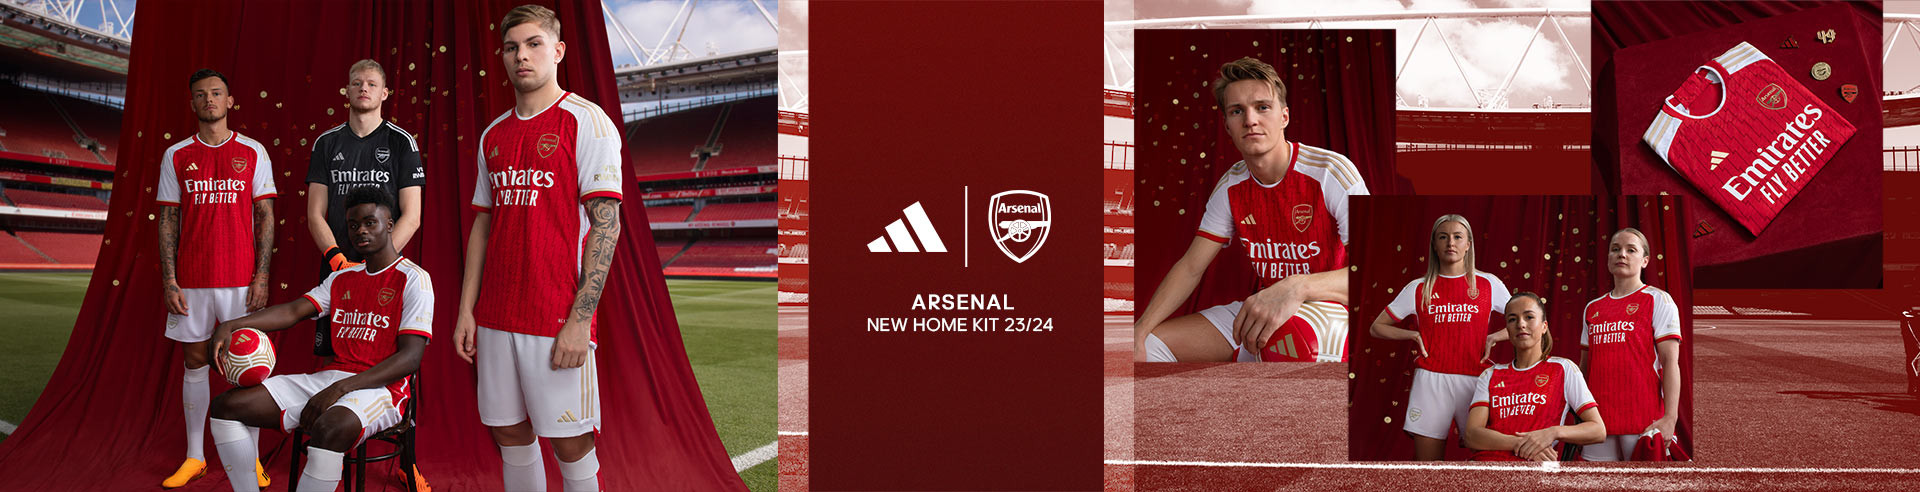 Adidas Arsenal New Home Kit 23/24 ALL